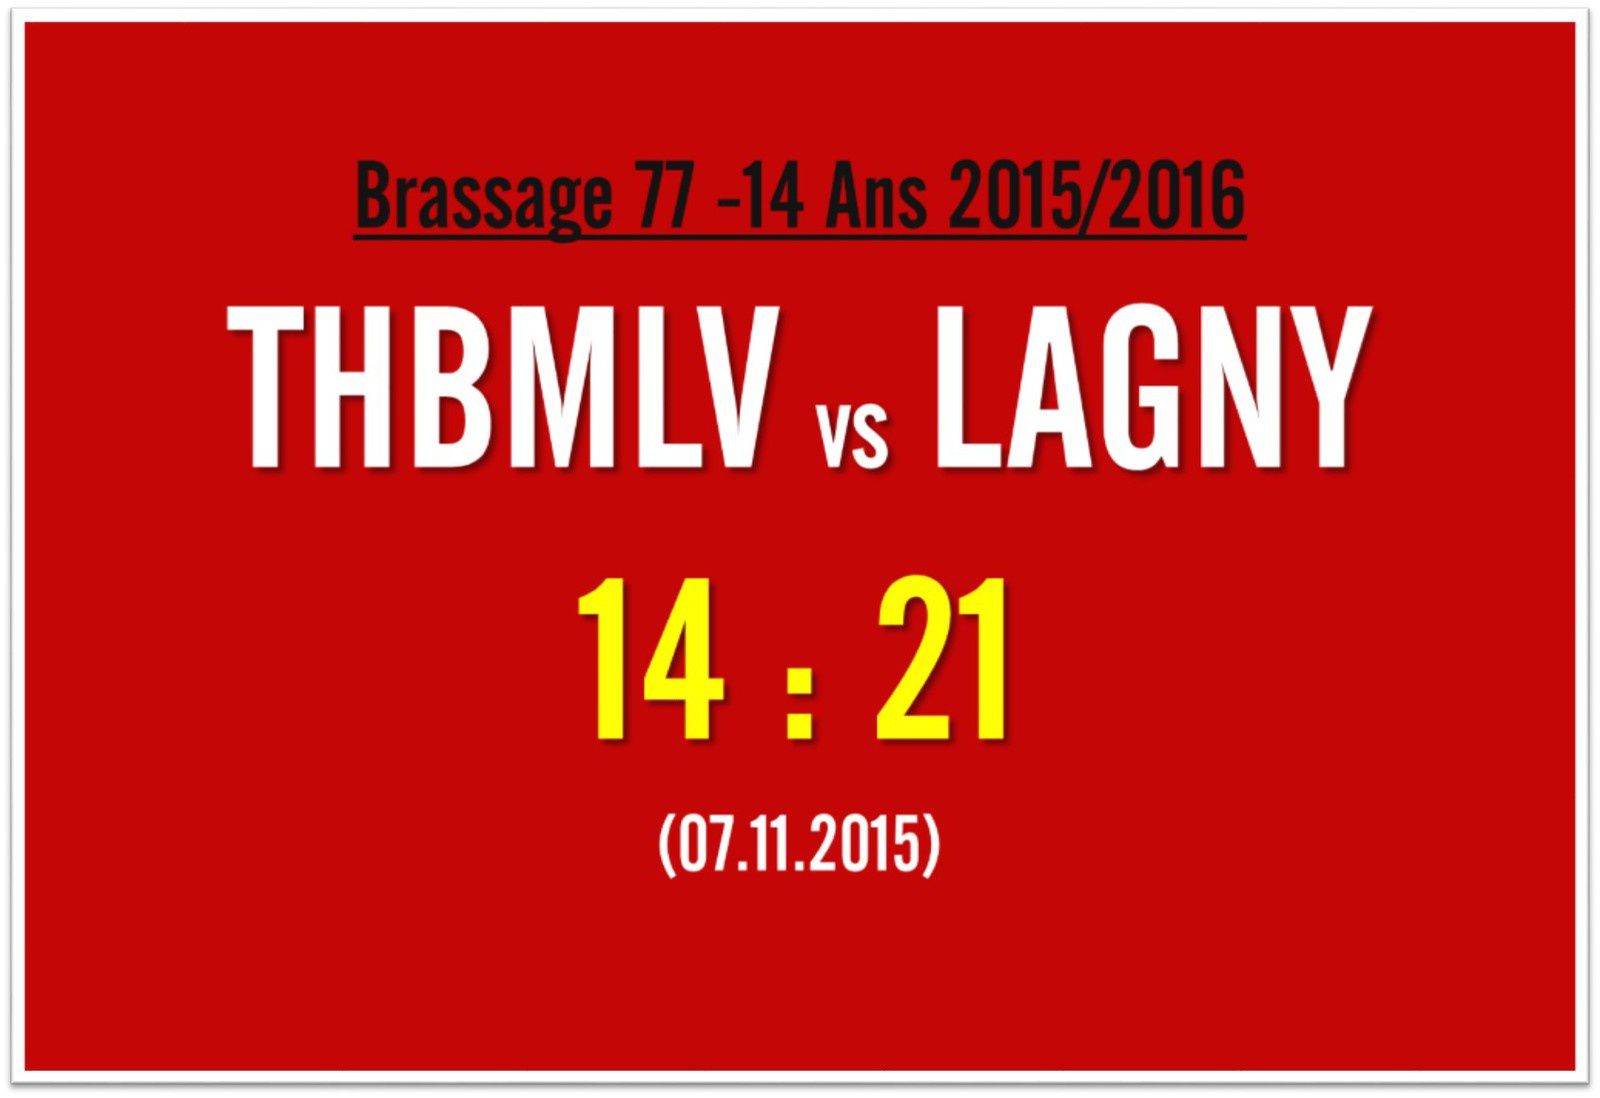 THBMLV vs LAGNY (Brassage 77 -14 Ans) 07.11.2015 